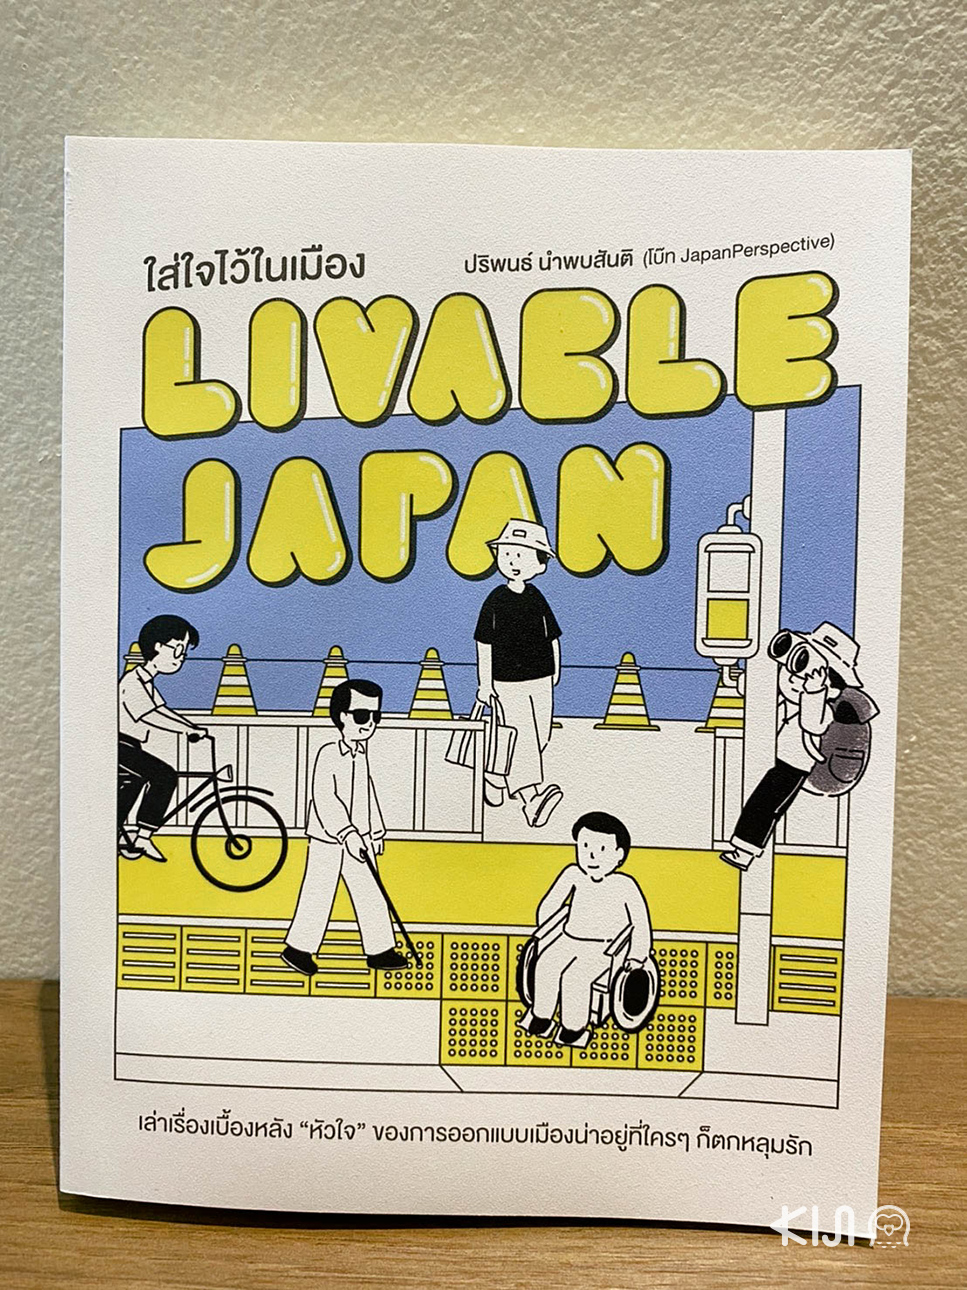 Livable Japan เต็มไปด้วยเรื่องราวรอบตัวมากมาย ที่จะเปิดเผยผ่าน 15 บท กว่า 315 หน้าจุกๆ ราคา 360 บาท